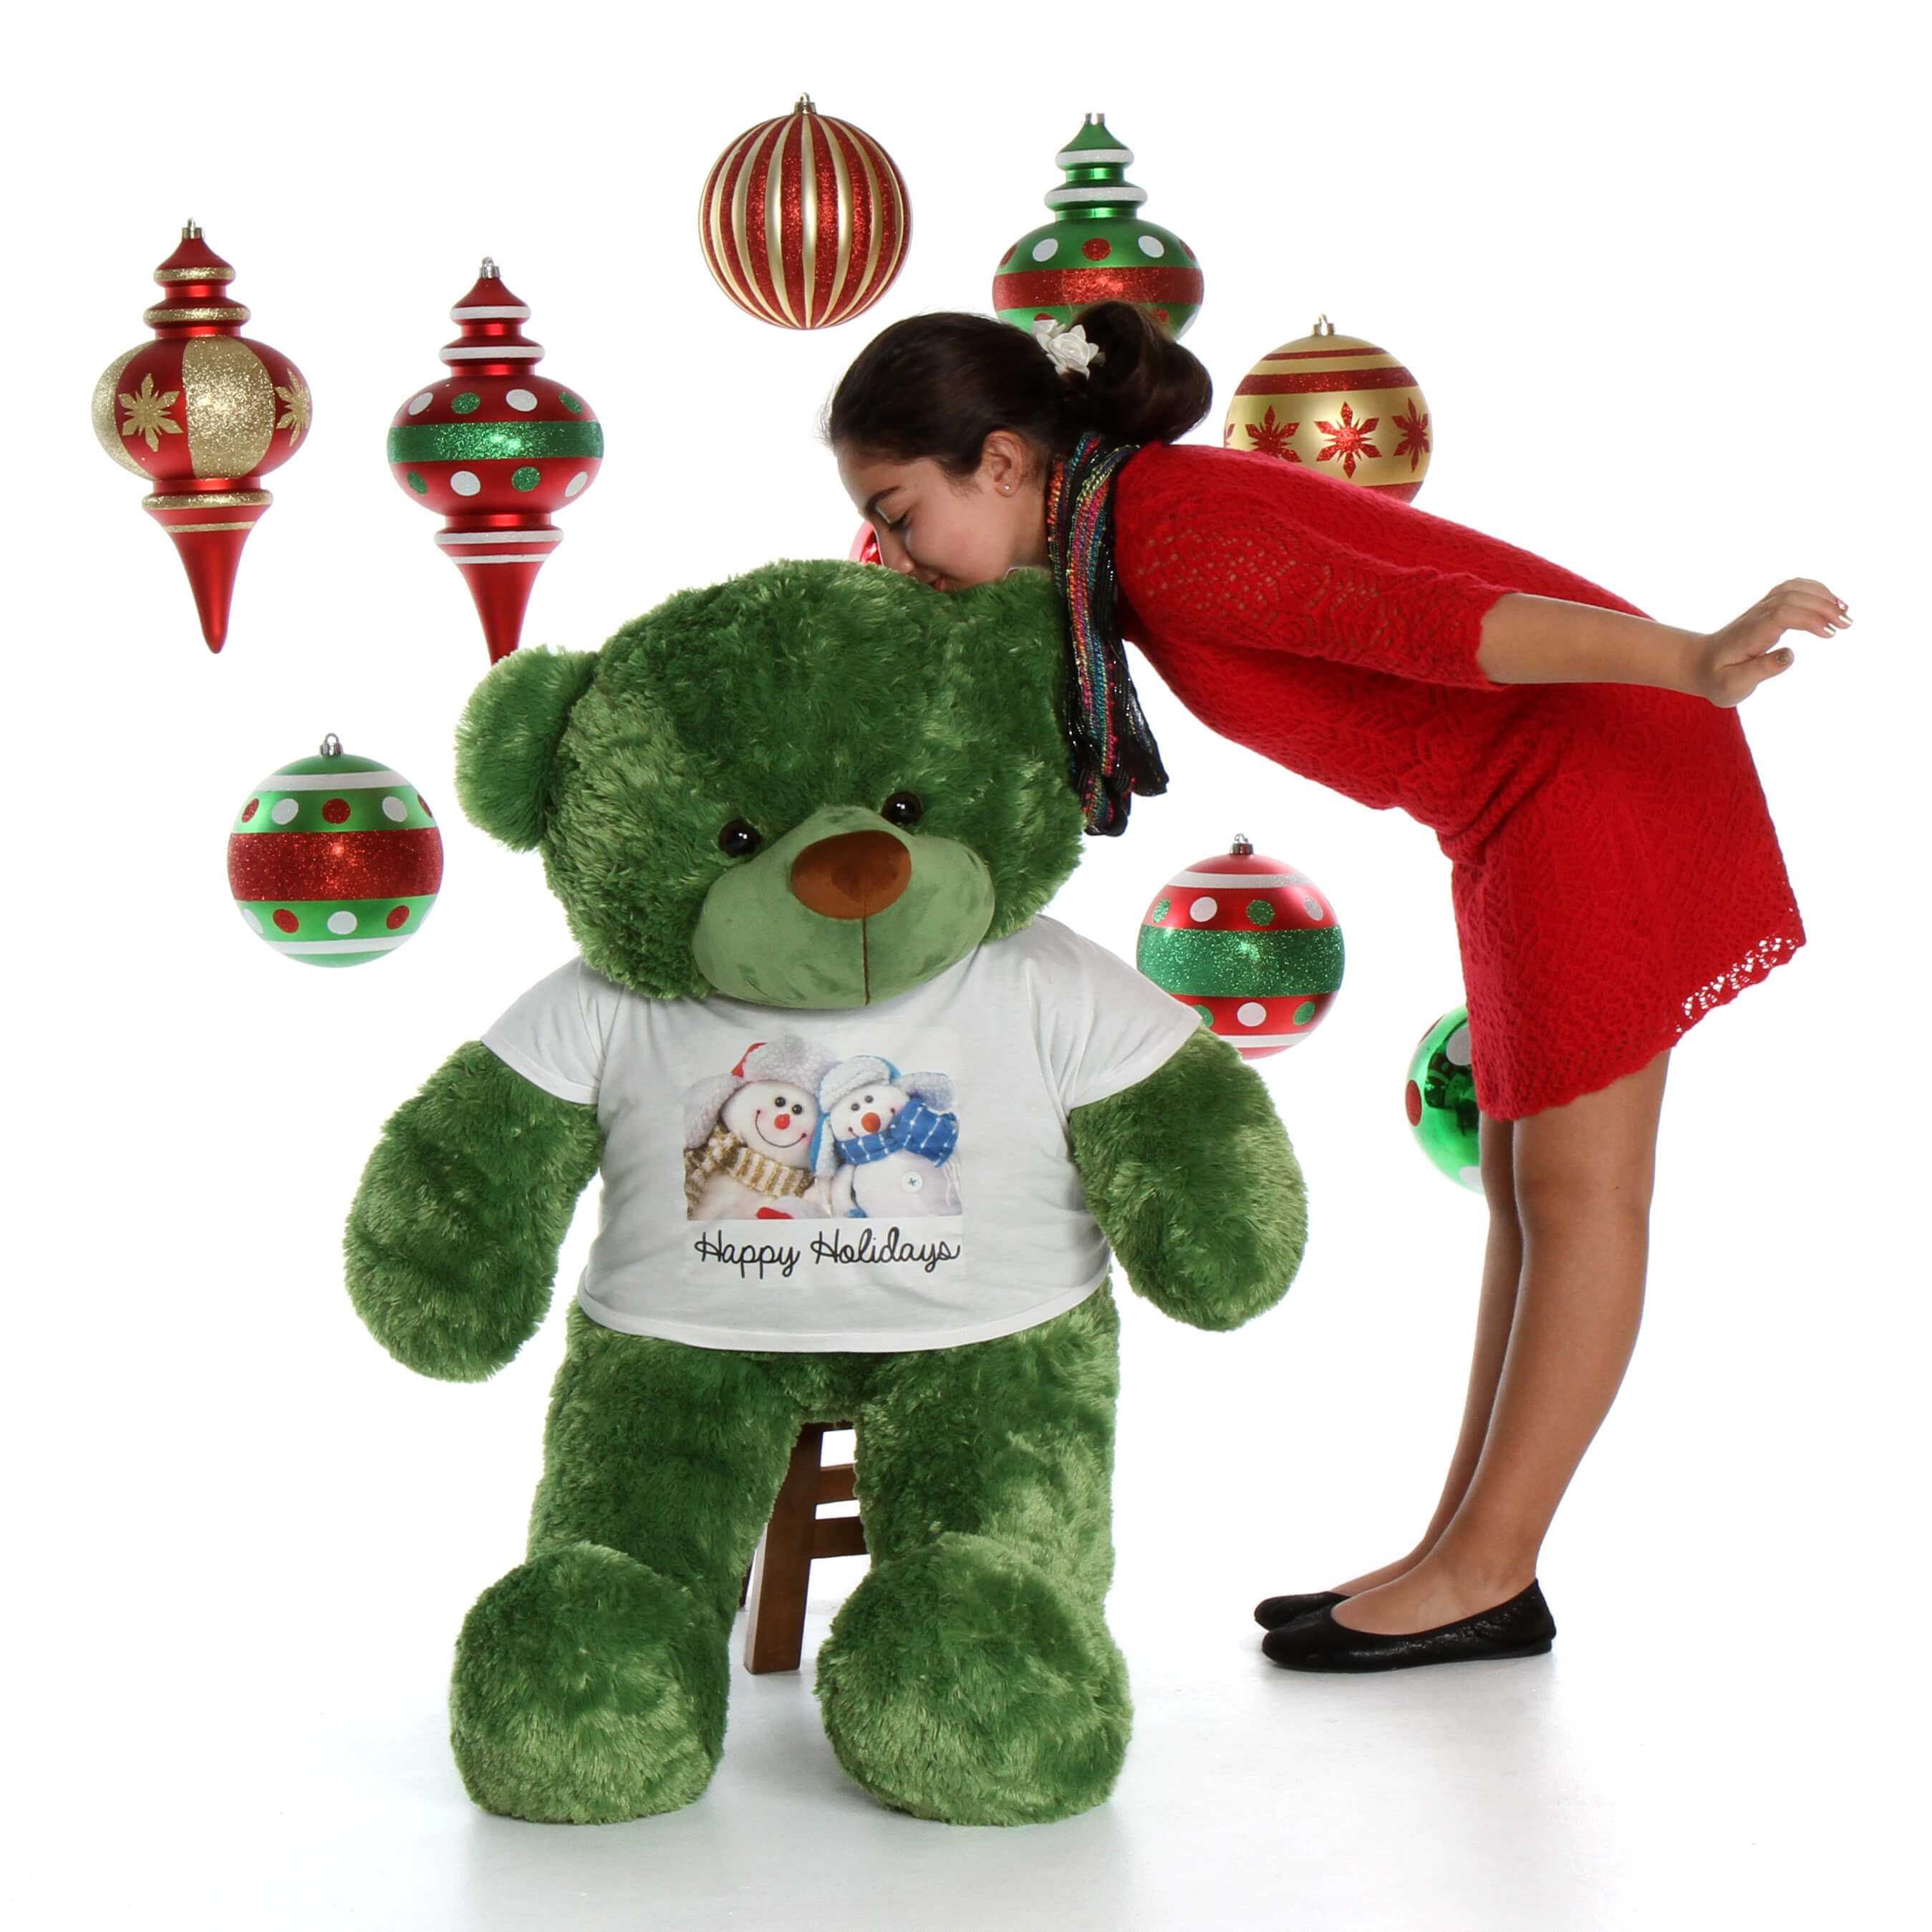 48in-lucky-cuddles-green-giant-teddy-bear-snowman-shirt-kisses1.jpg